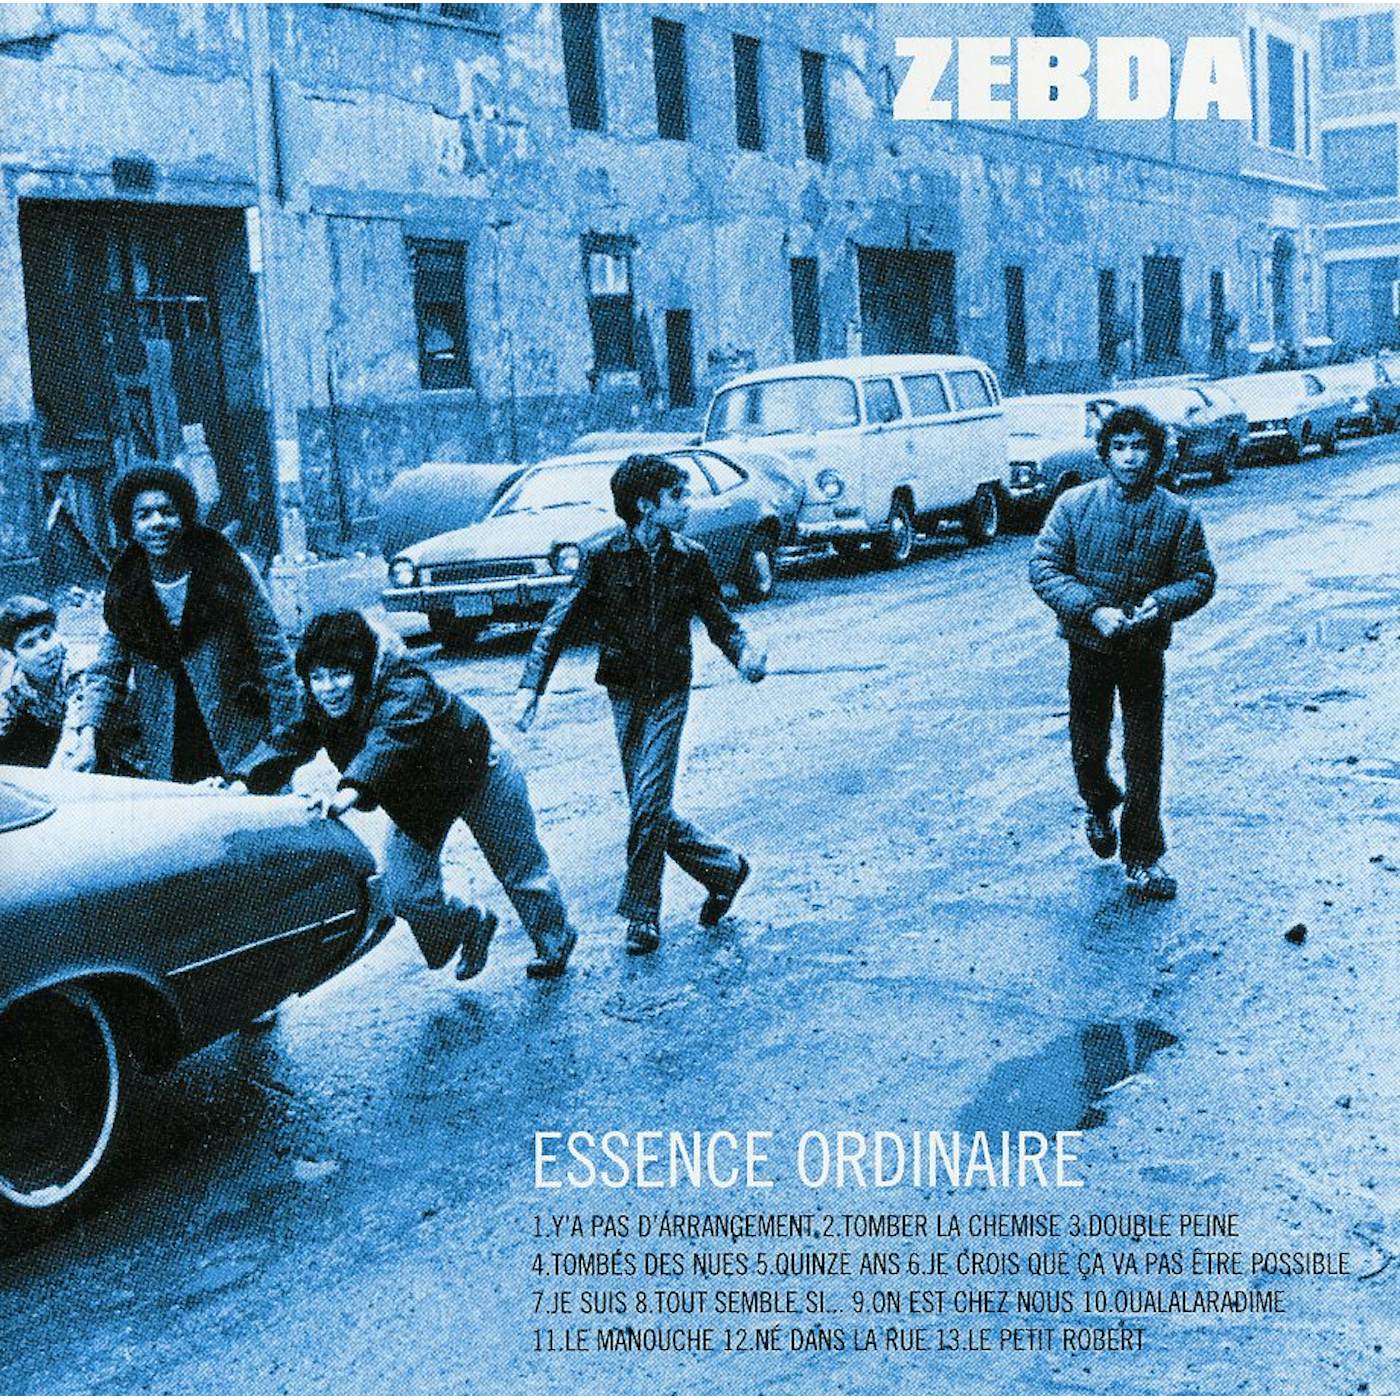 Zebda ESSENCE ORDINAIRE CD